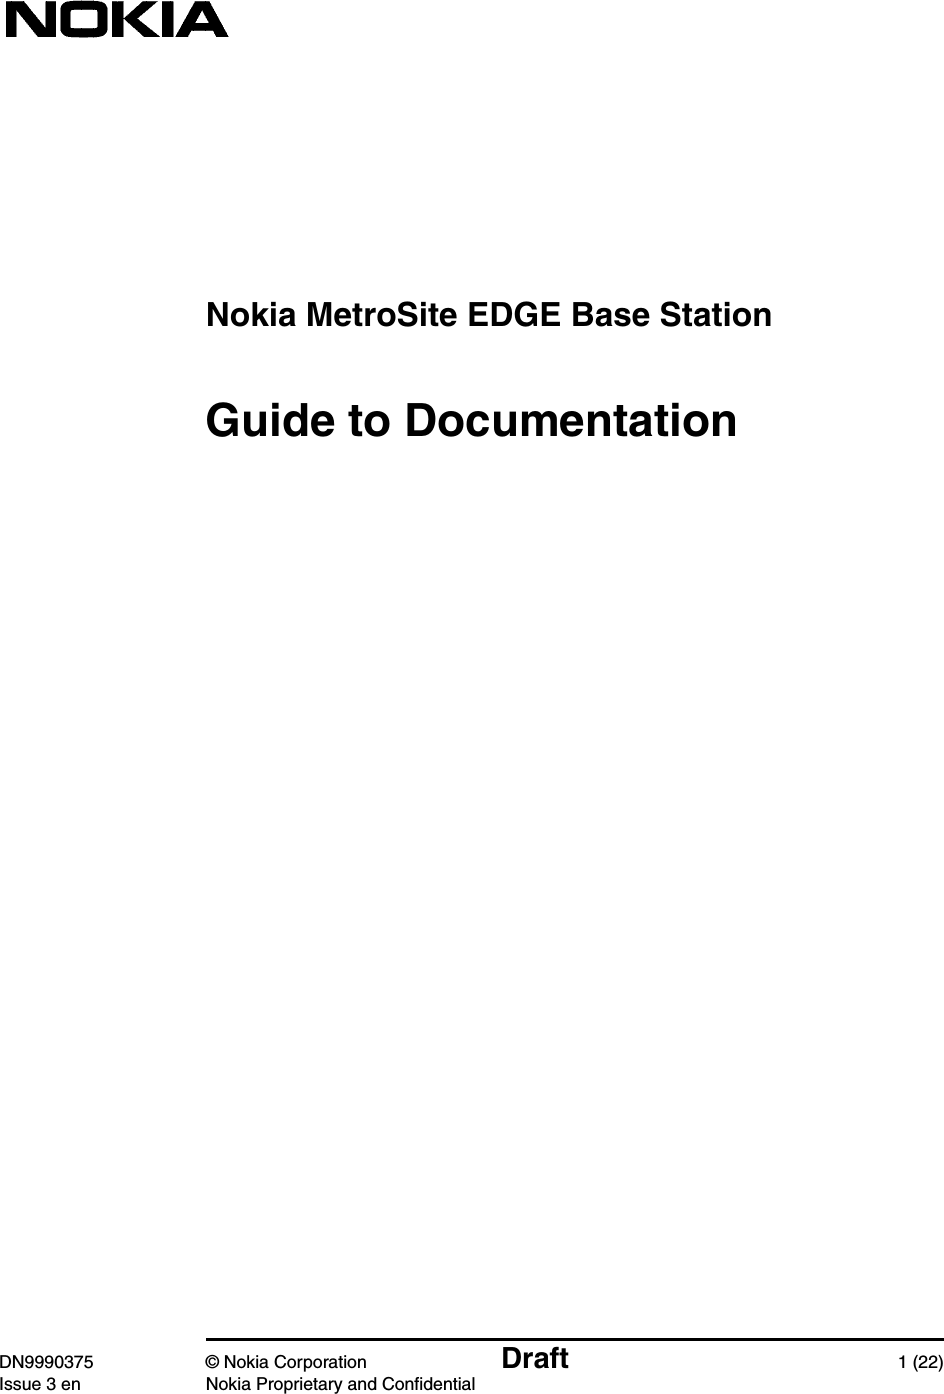 Nokia MetroSite EDGE Base StationDN9990375 © Nokia Corporation Draft 1 (22)Issue 3 en Nokia Proprietary and ConfidentialGuide to Documentation